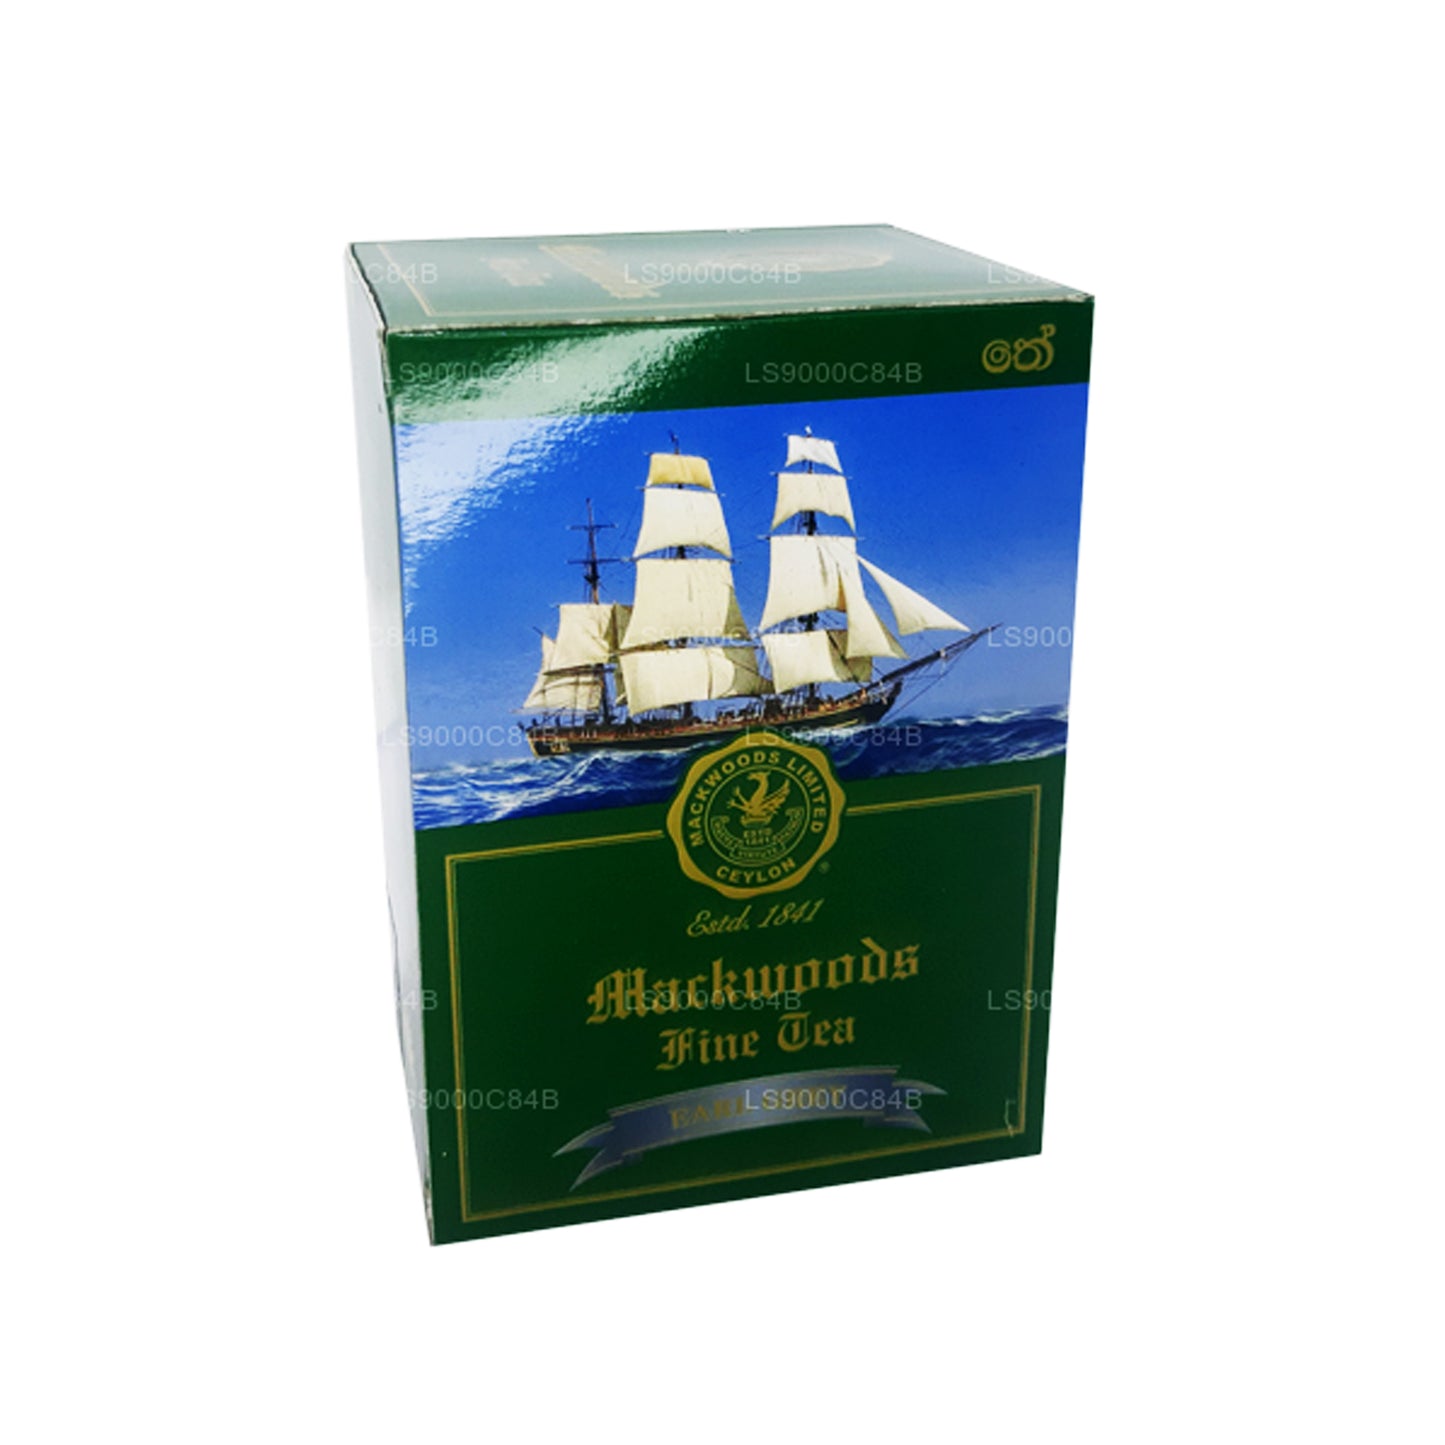 Mackwoods Earl Grey Tea (50g) 25 Tea Bags